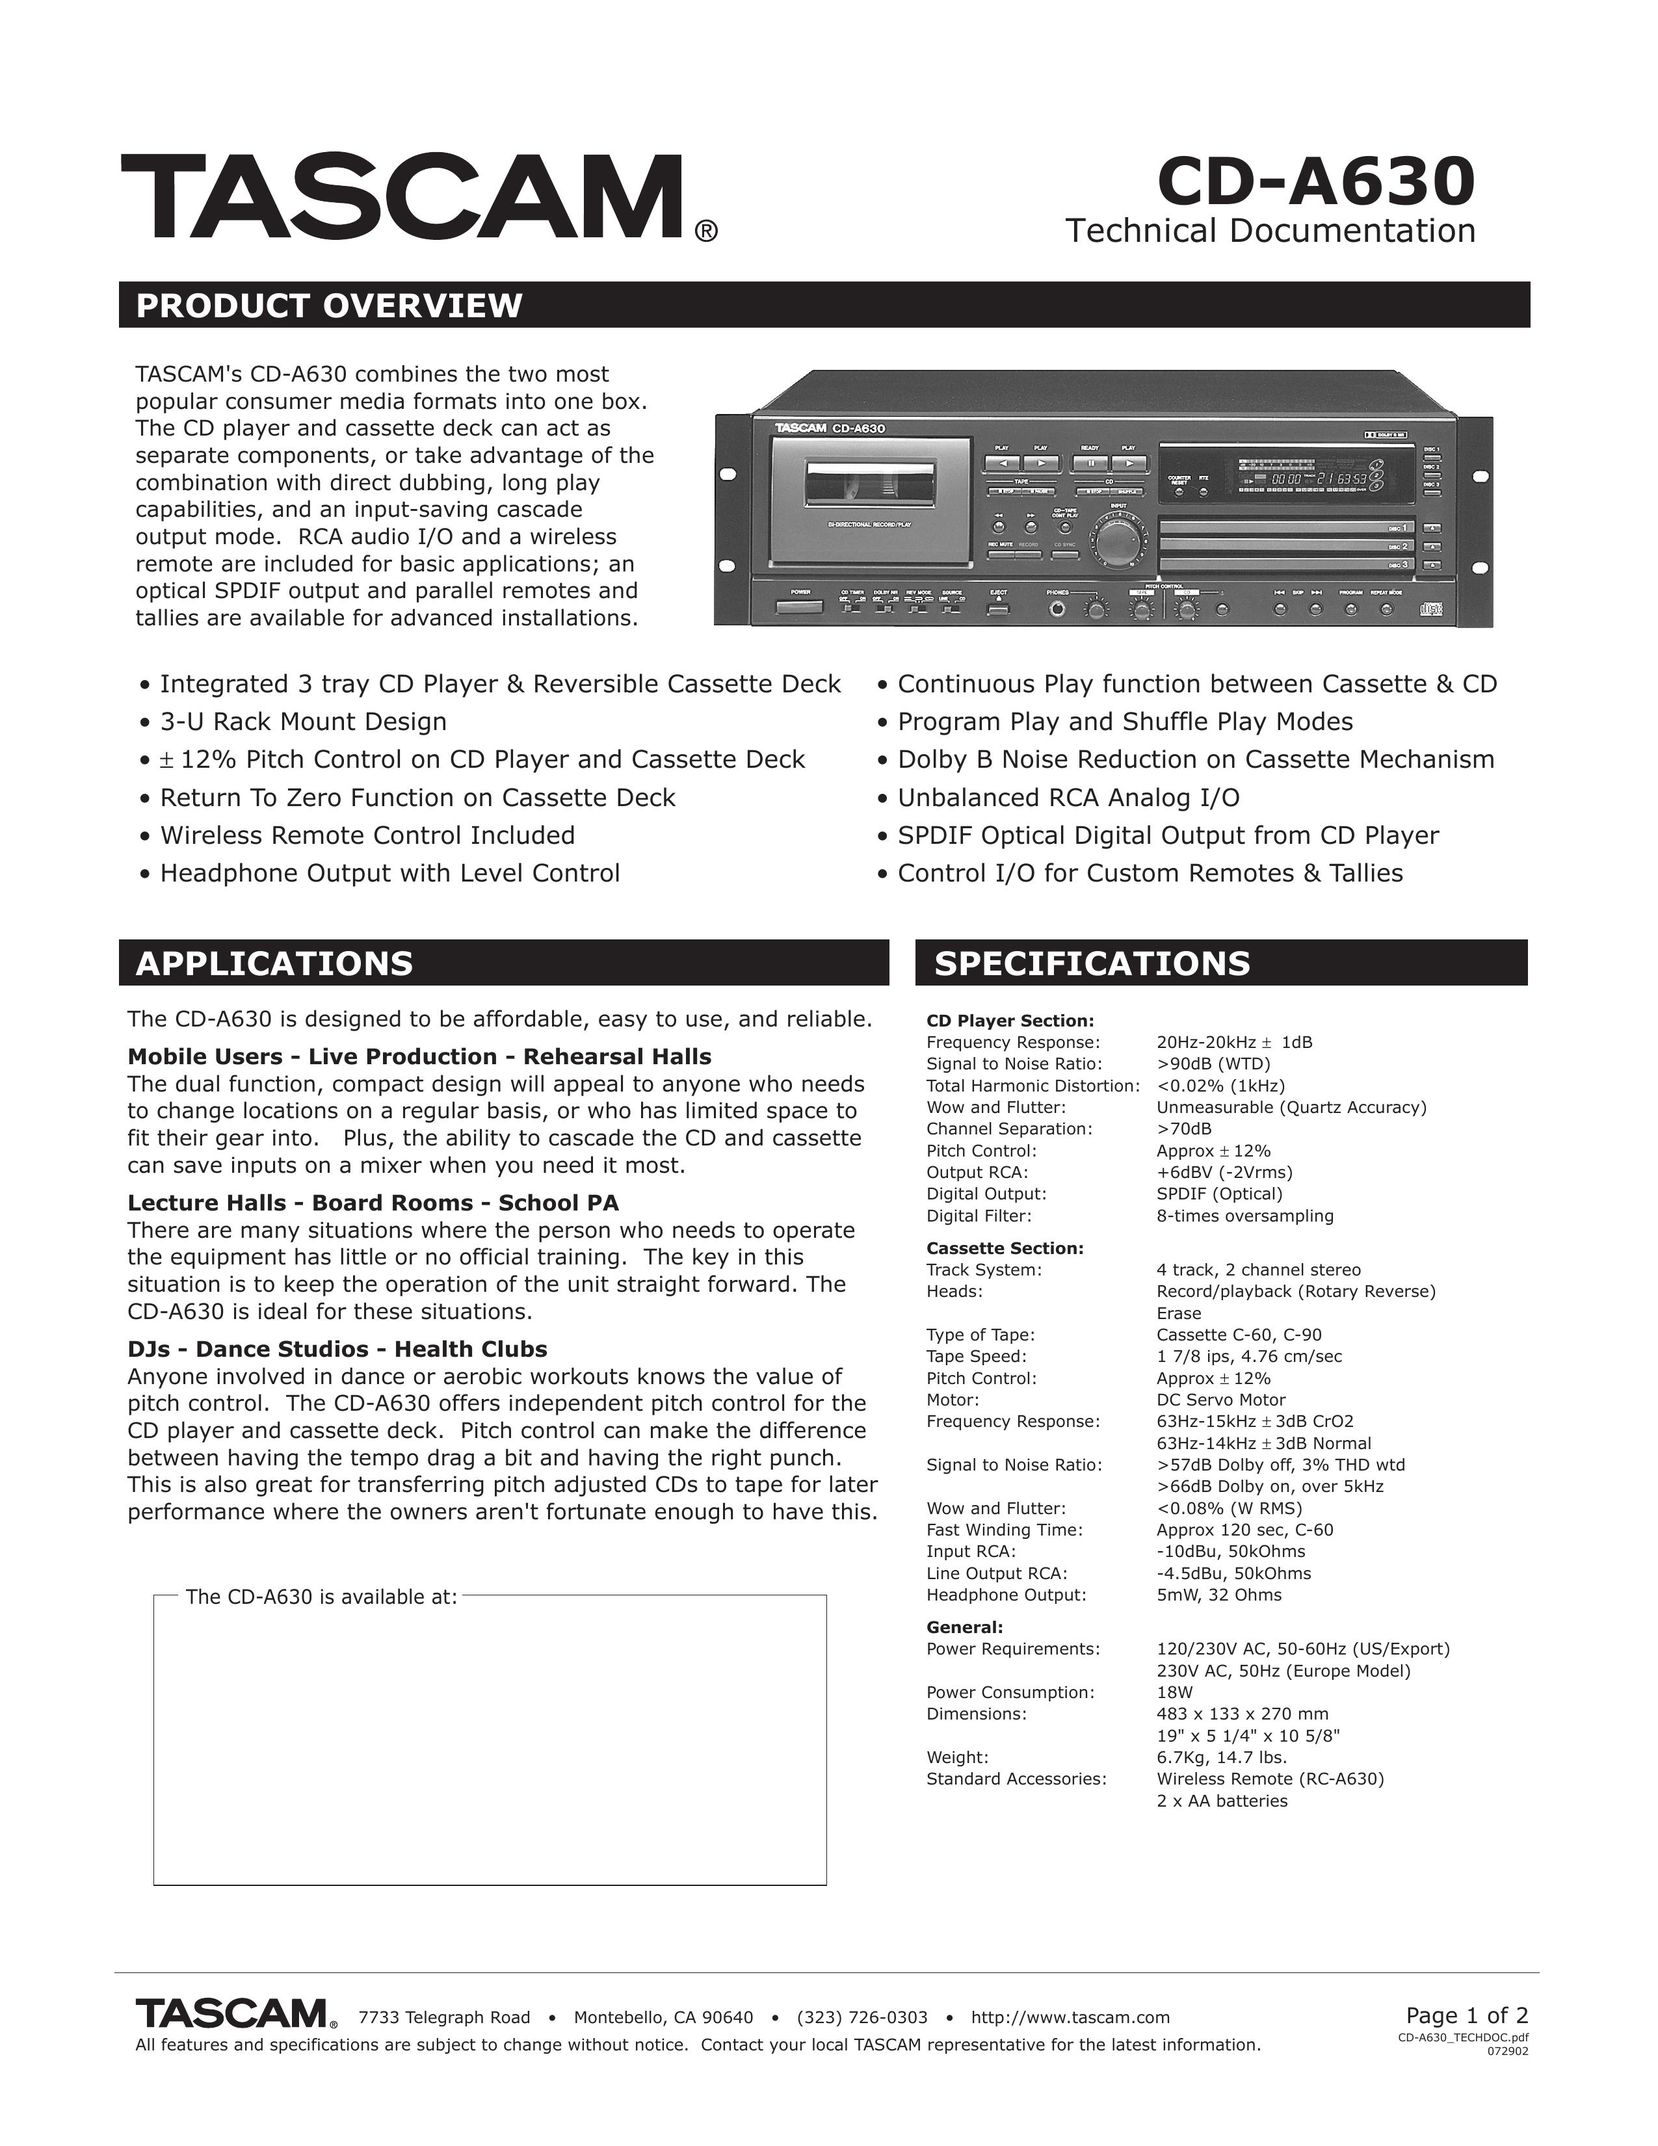 Tascam CD-A630 CD Player User Manual